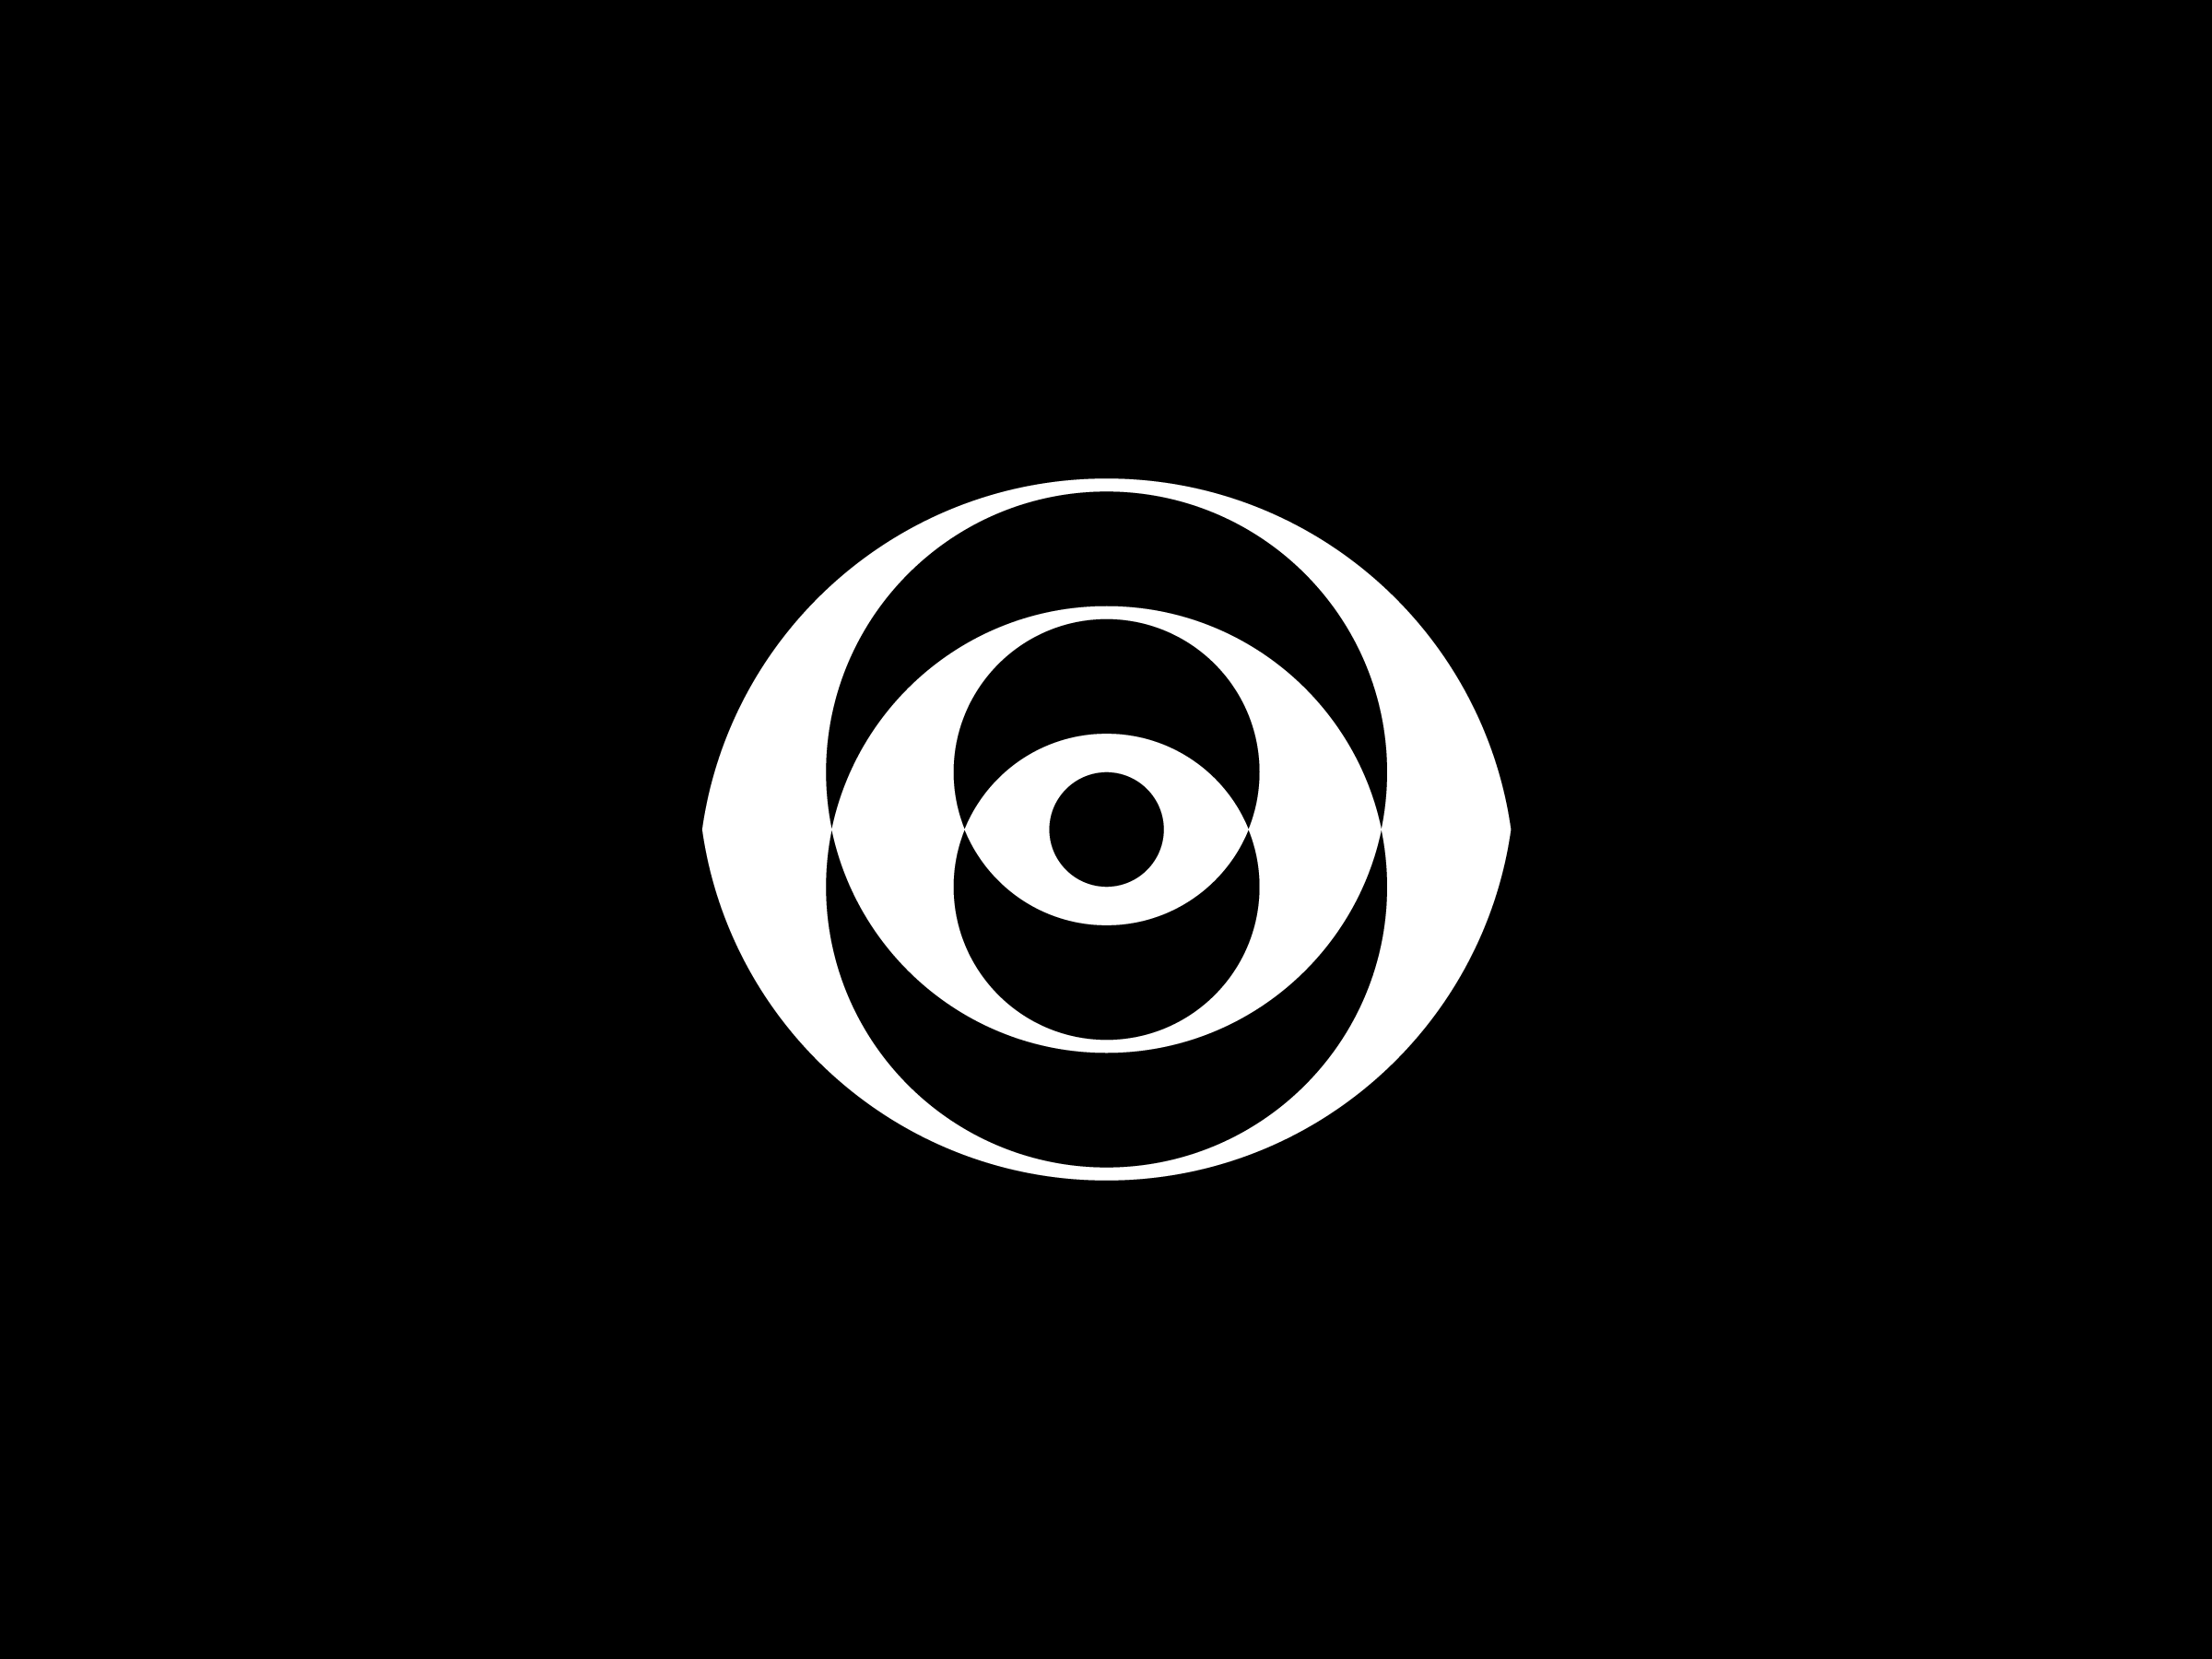 Concentric Circles Logo Concept // For SALE